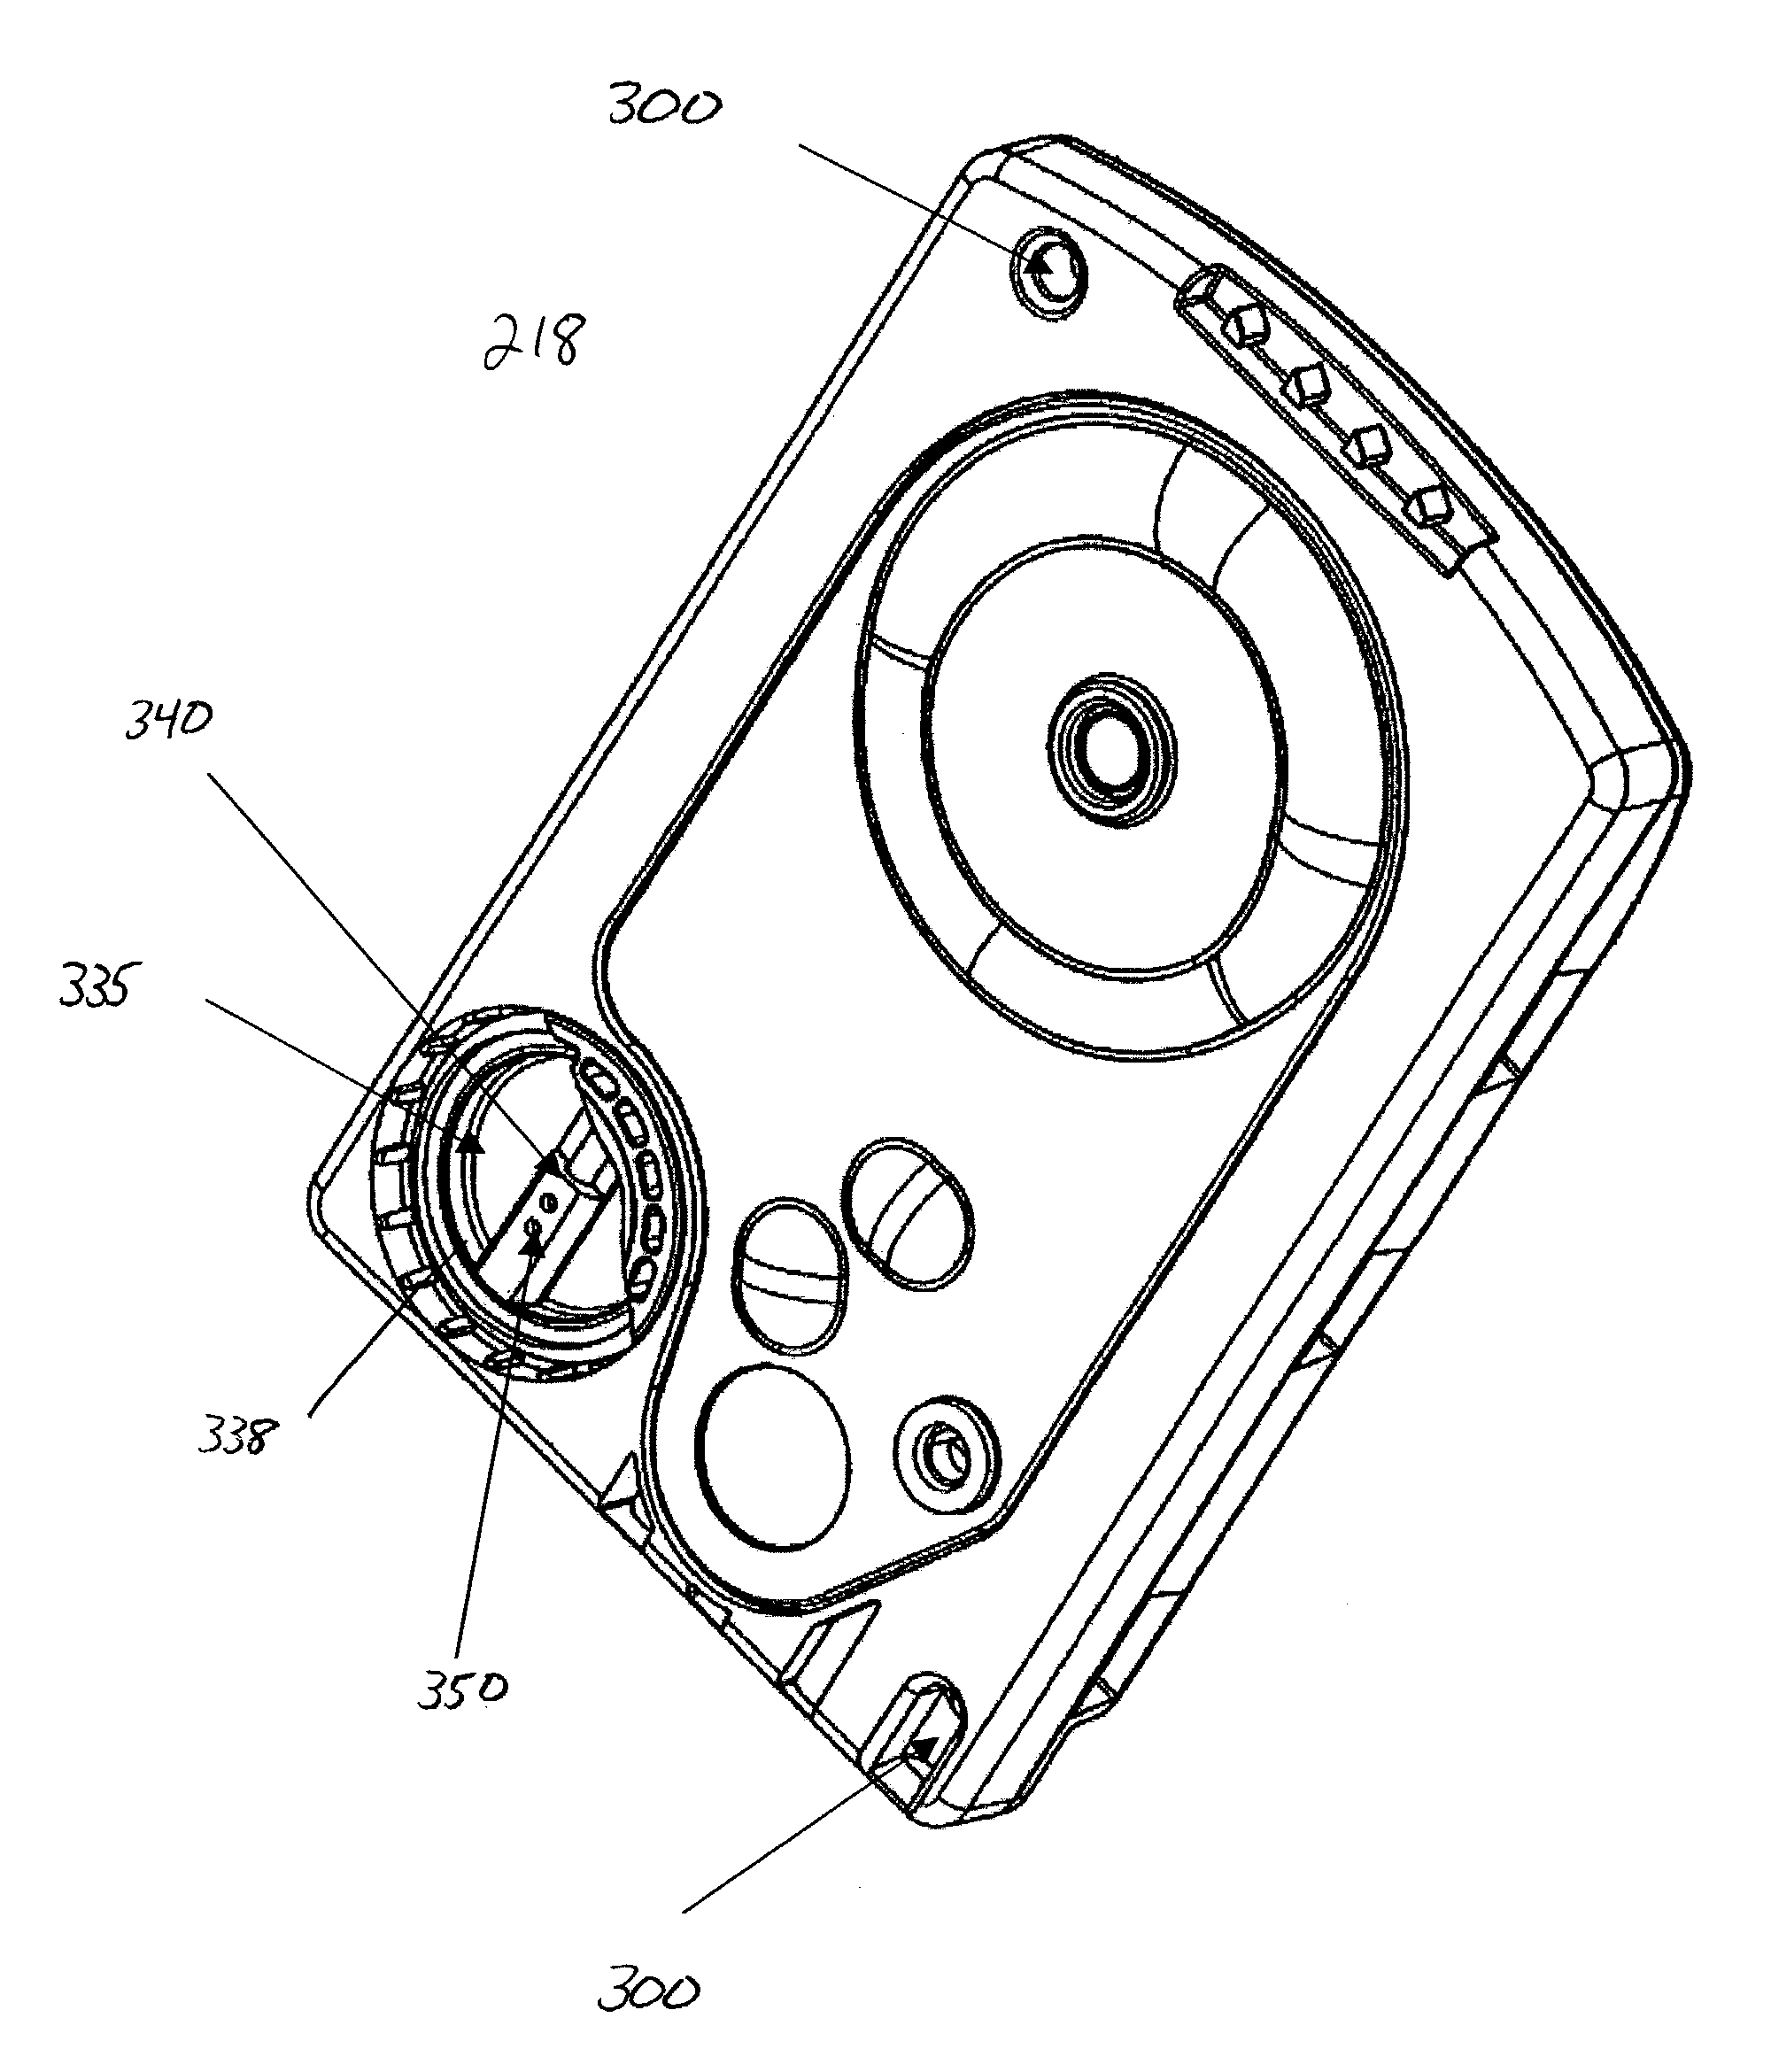 Surgical cassette having an aspiration pressure sensor